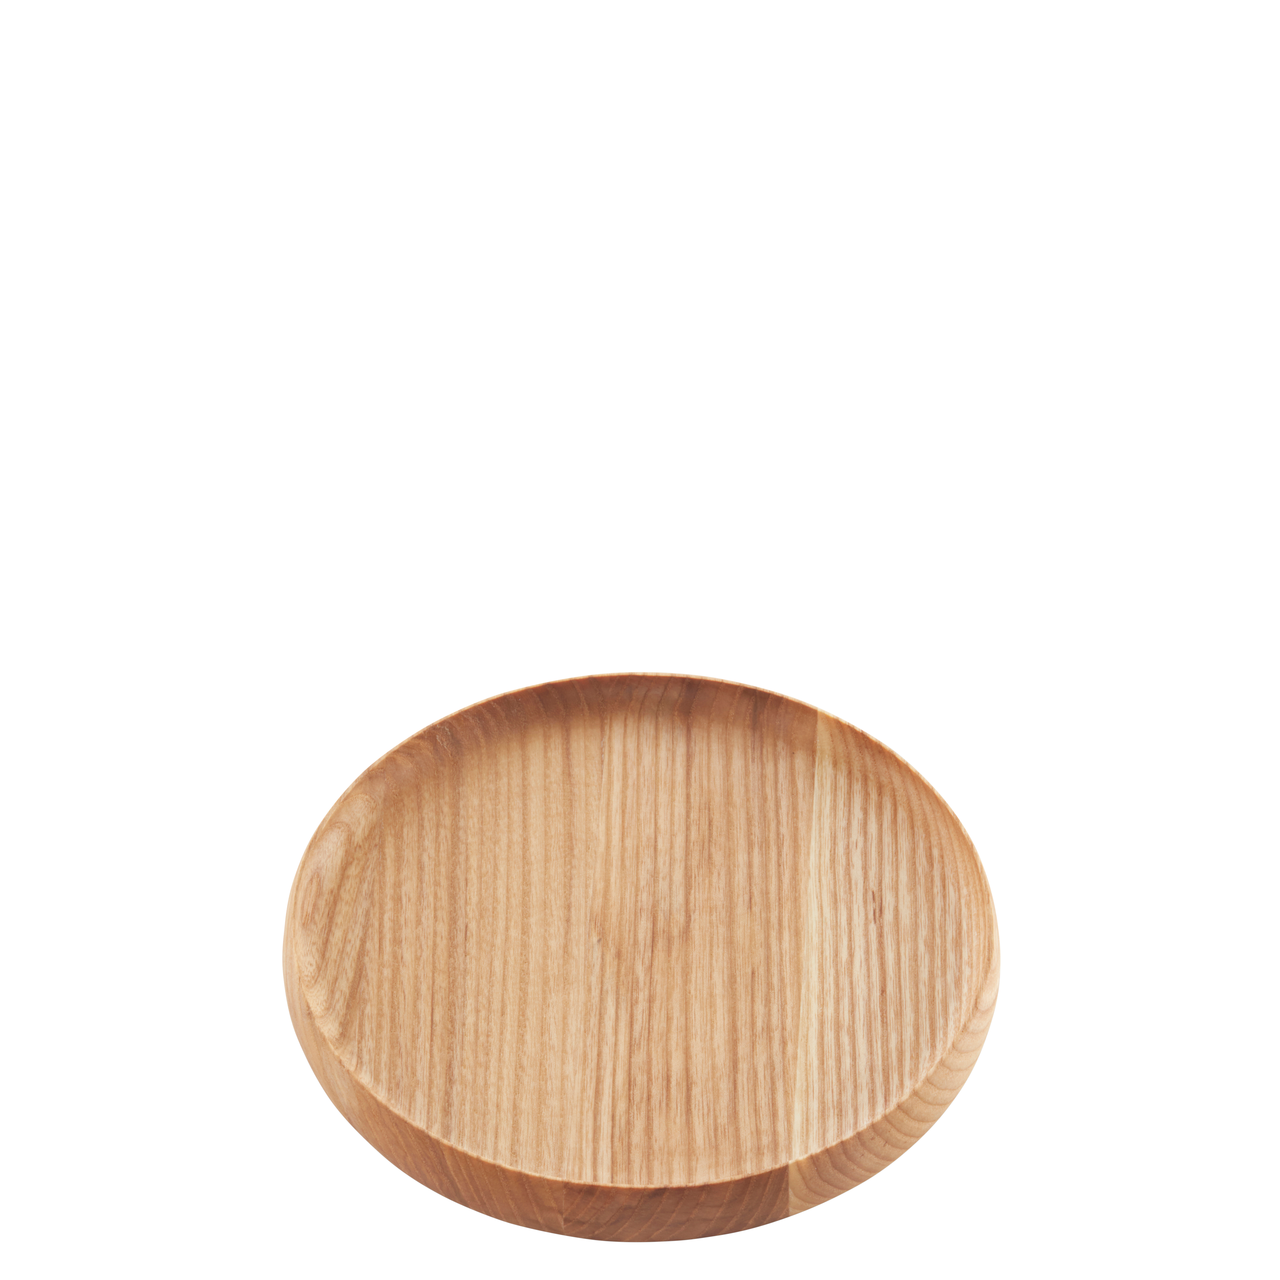 Tray wood (ahwood) round Ø16cm